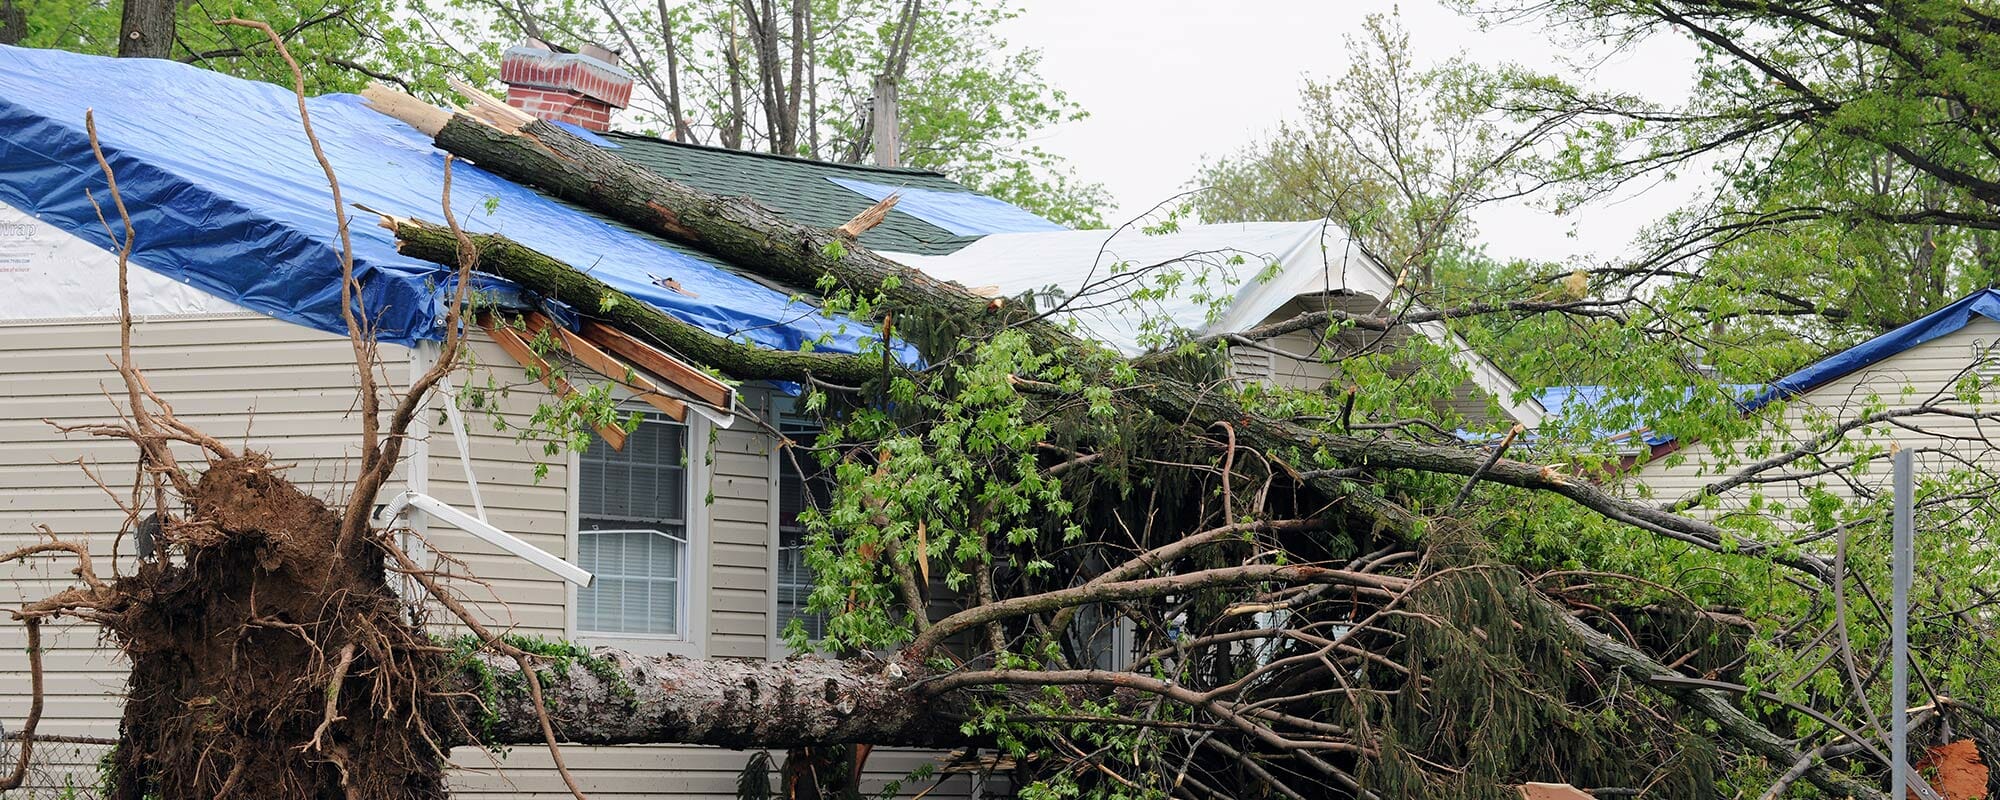 trusted storm damage roof repair roofers Wichita, KS